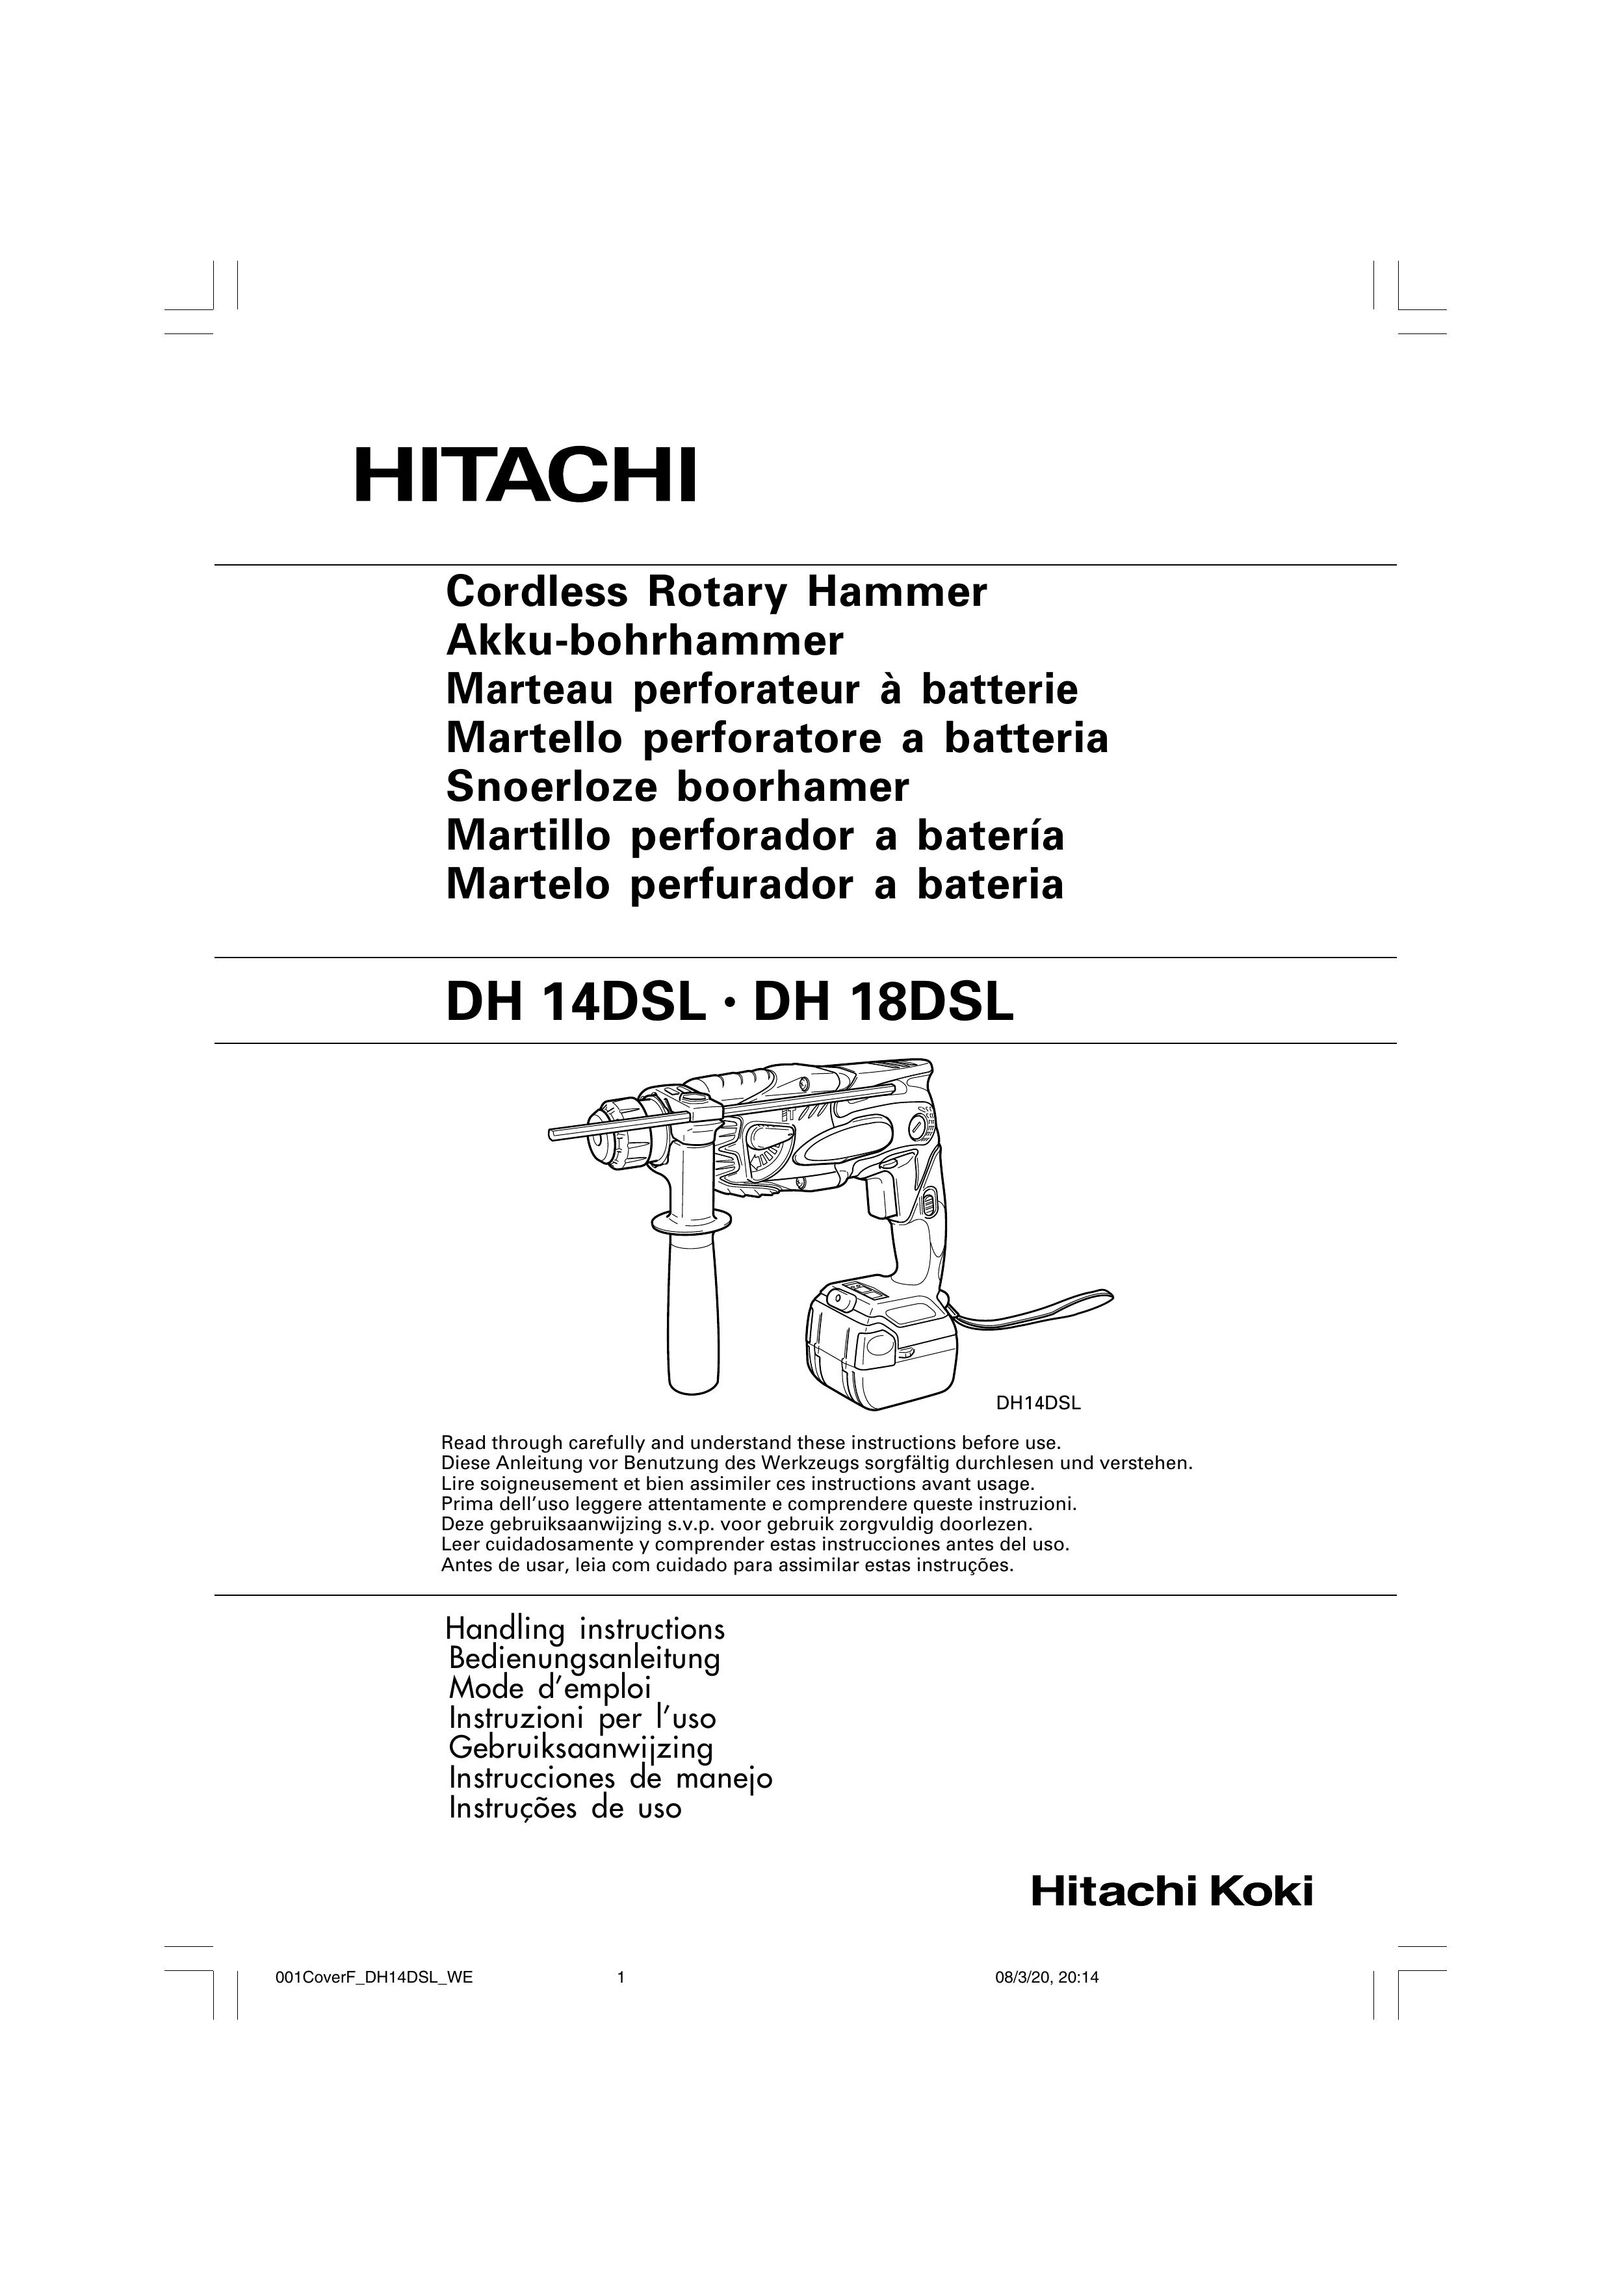 Hitachi Koki USA DH 14DSL Power Hammer User Manual